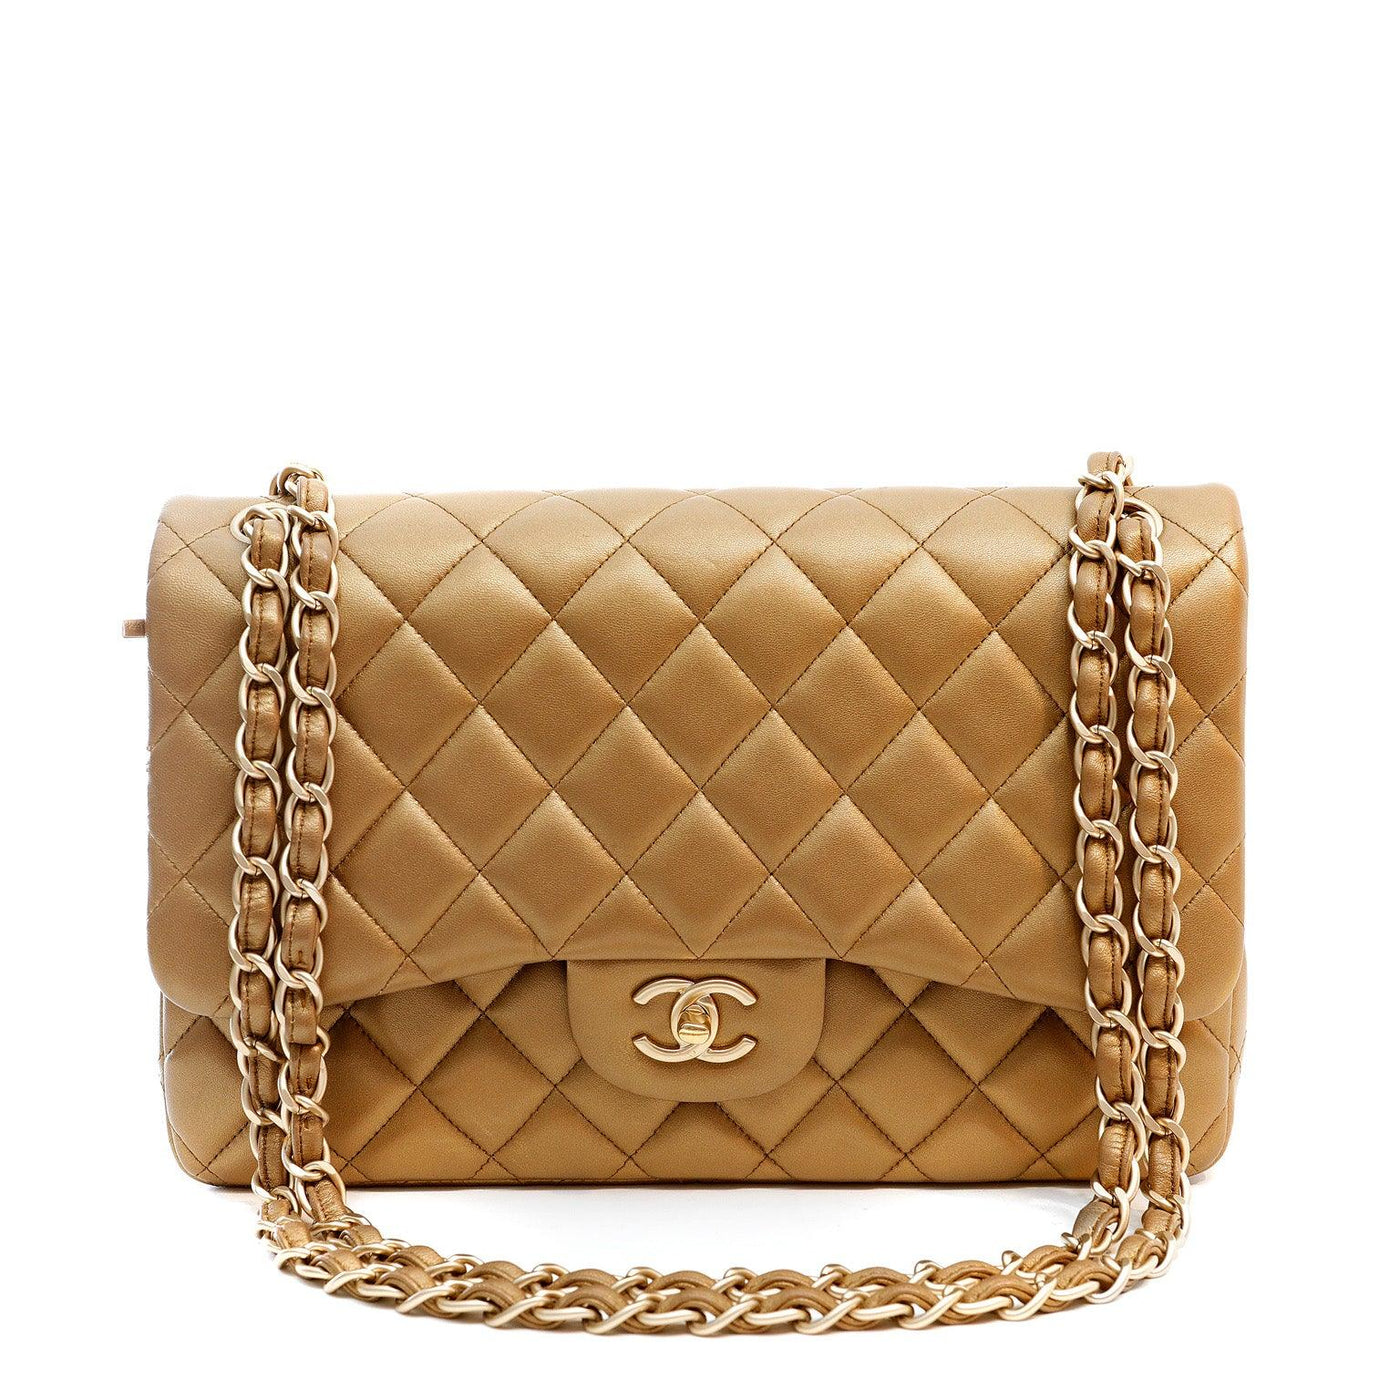 Chanel Metallic Bronze Lambskin Jumbo Classic Flap Bag - Only Authentics